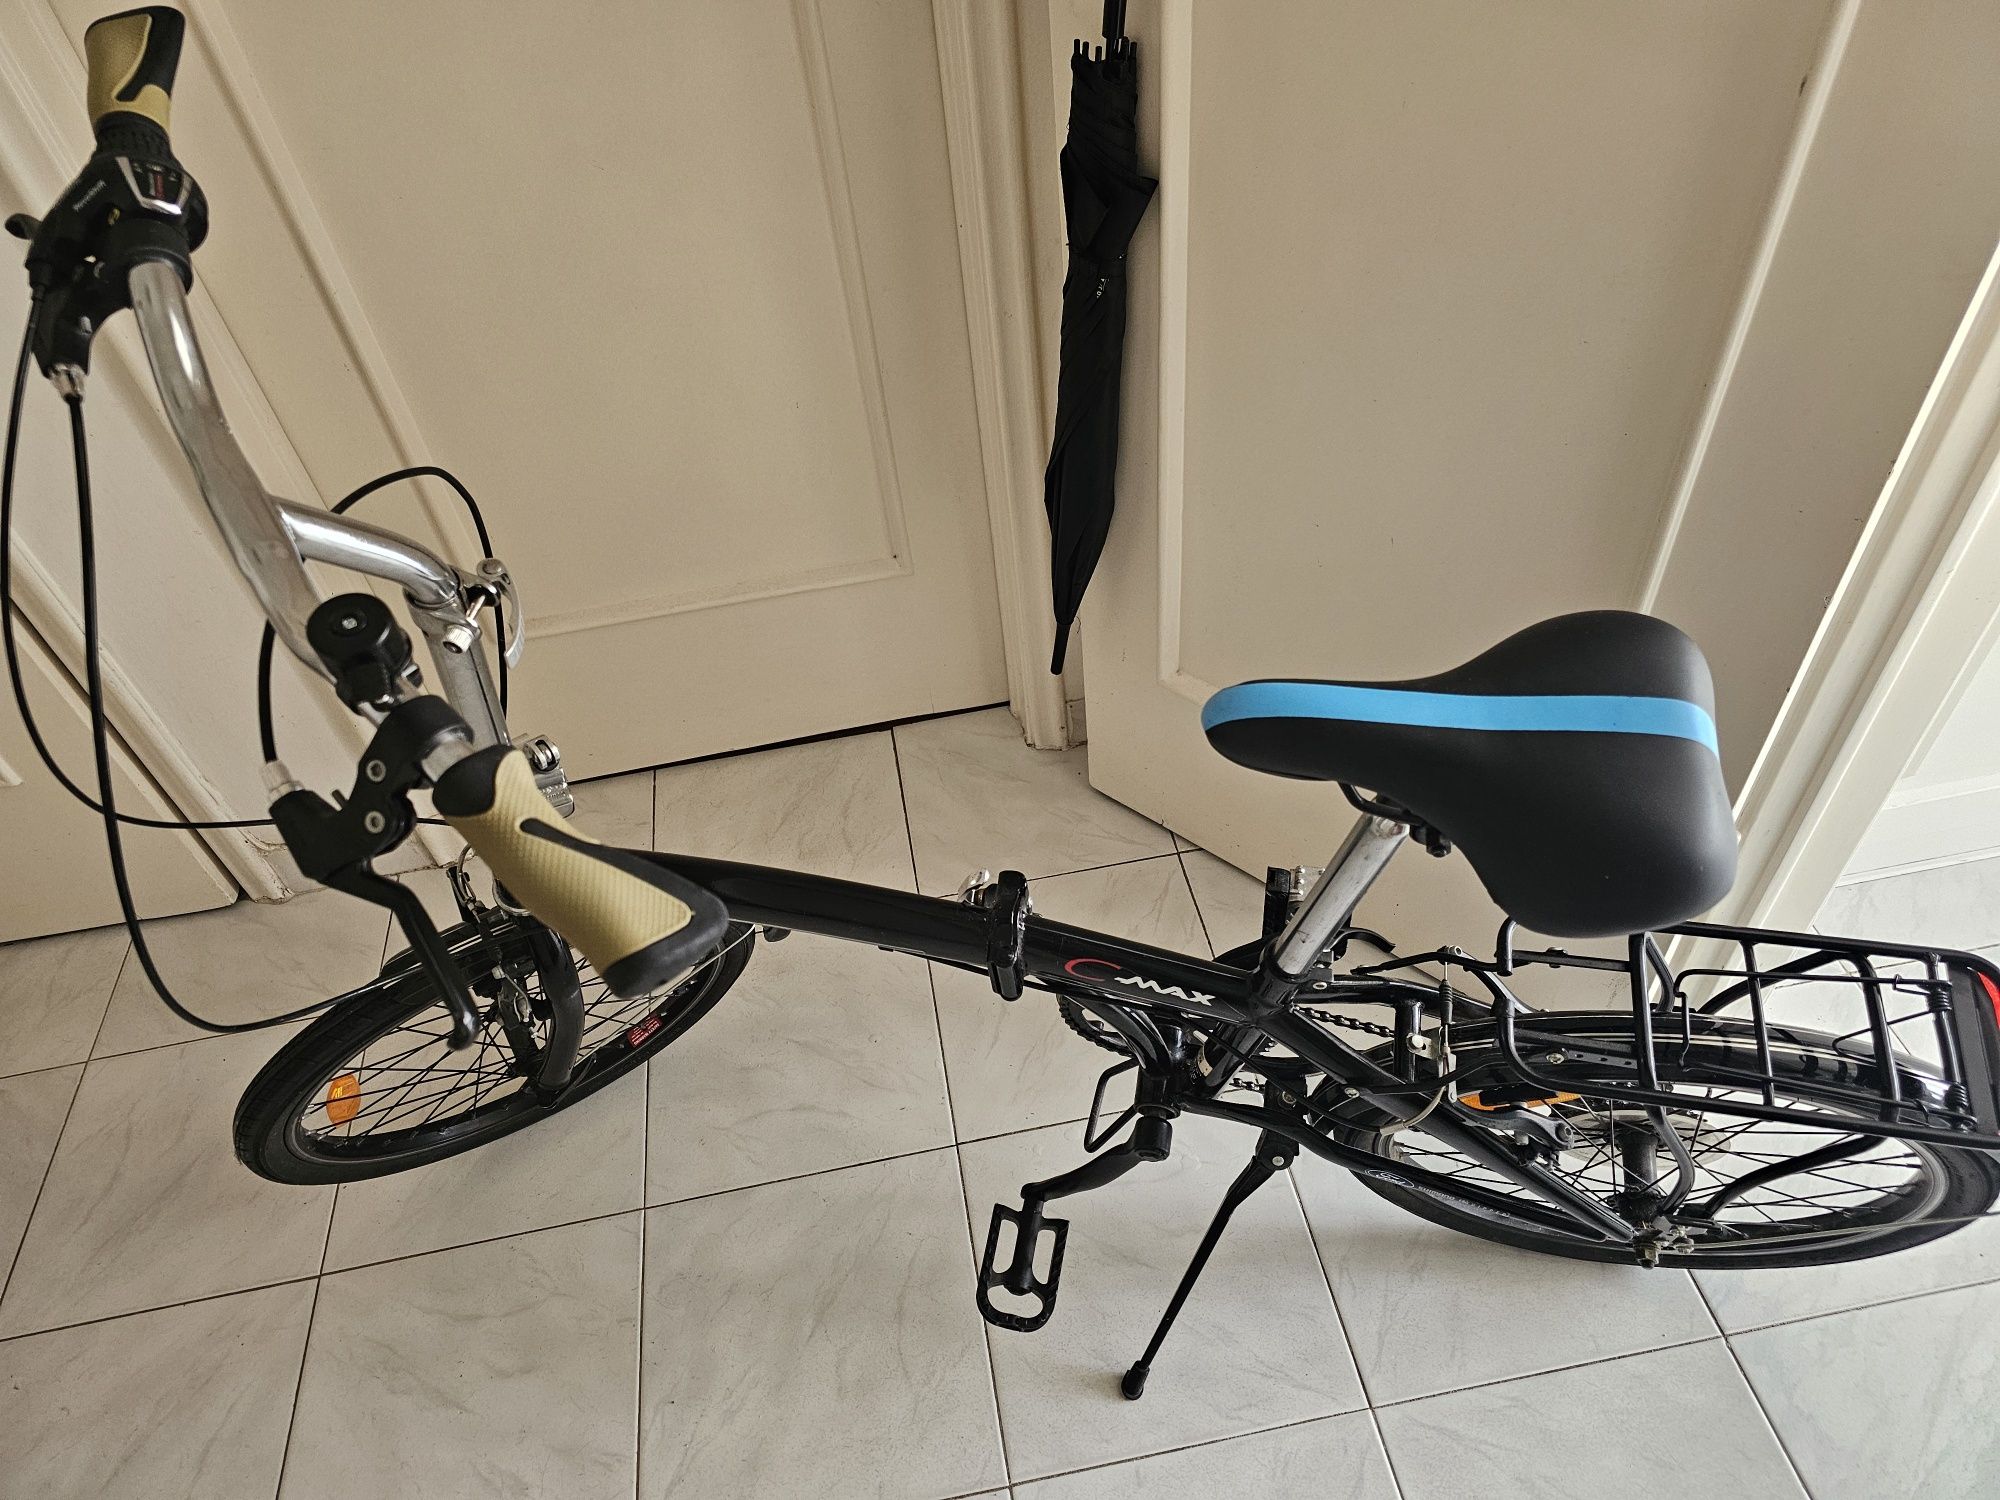 Bicicleta Dobrável Ford Dahon C Max 20"